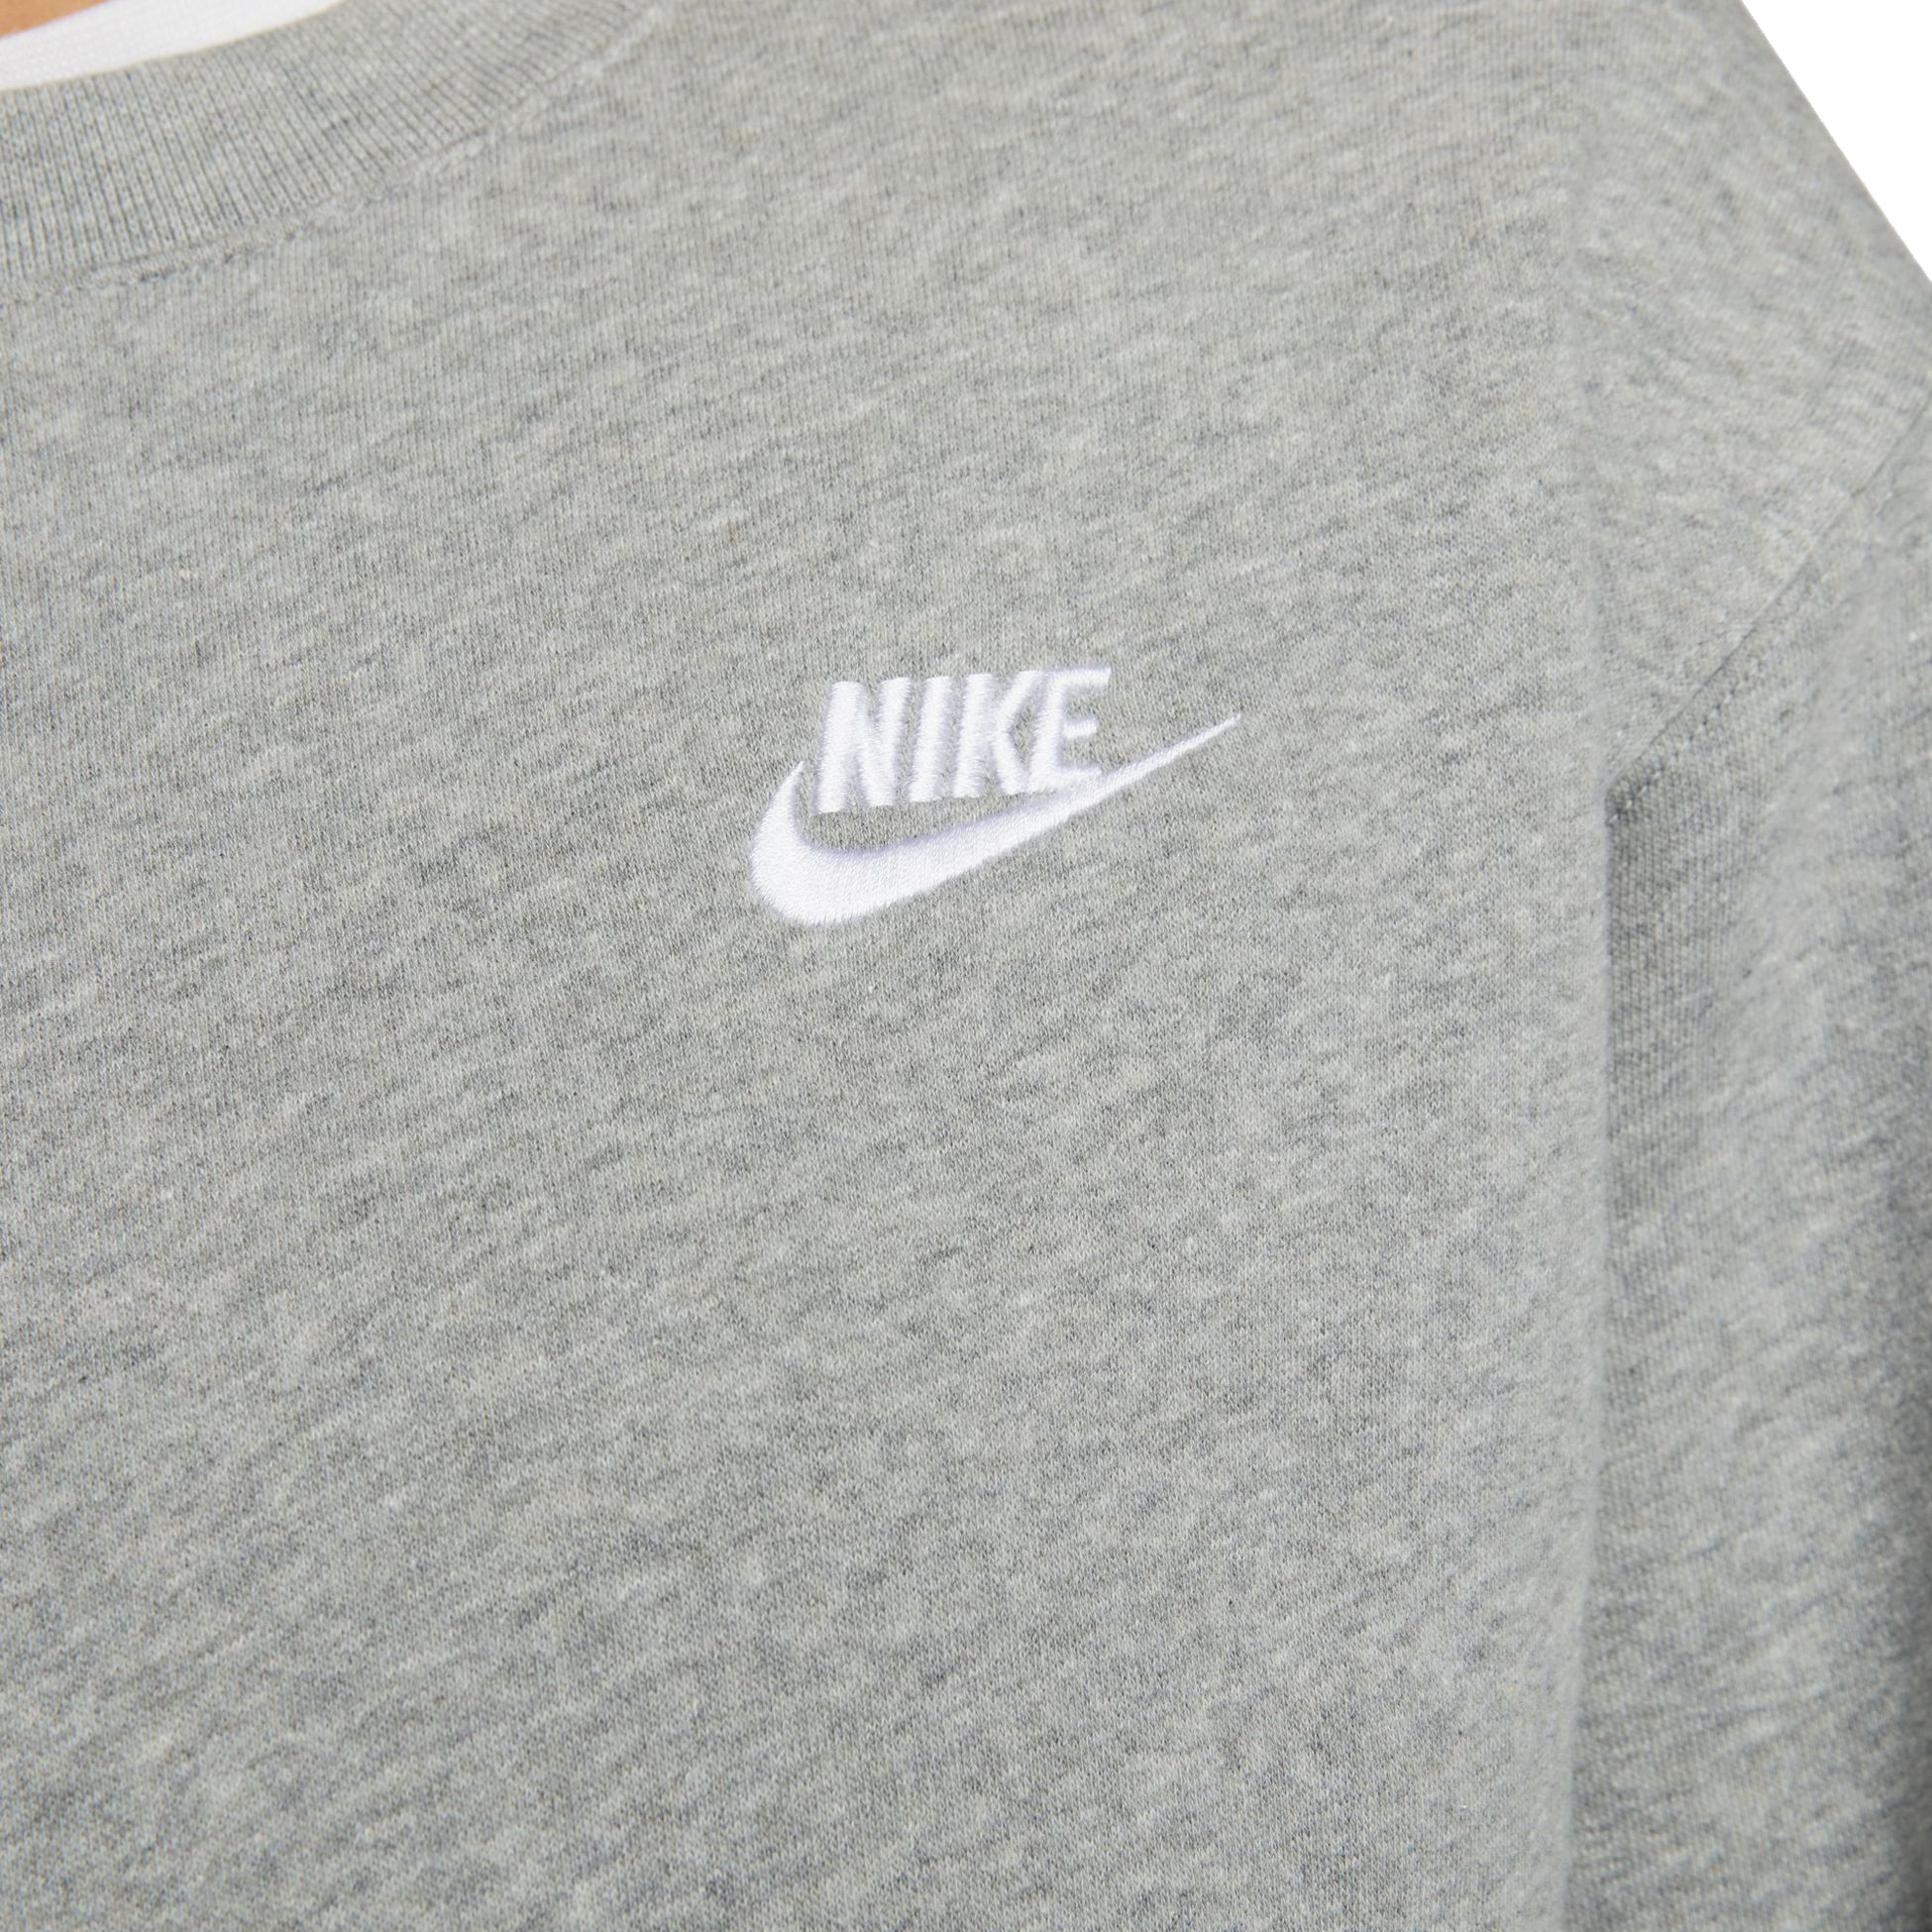 NIKE, Nike Sportswear Club Fleece Crew